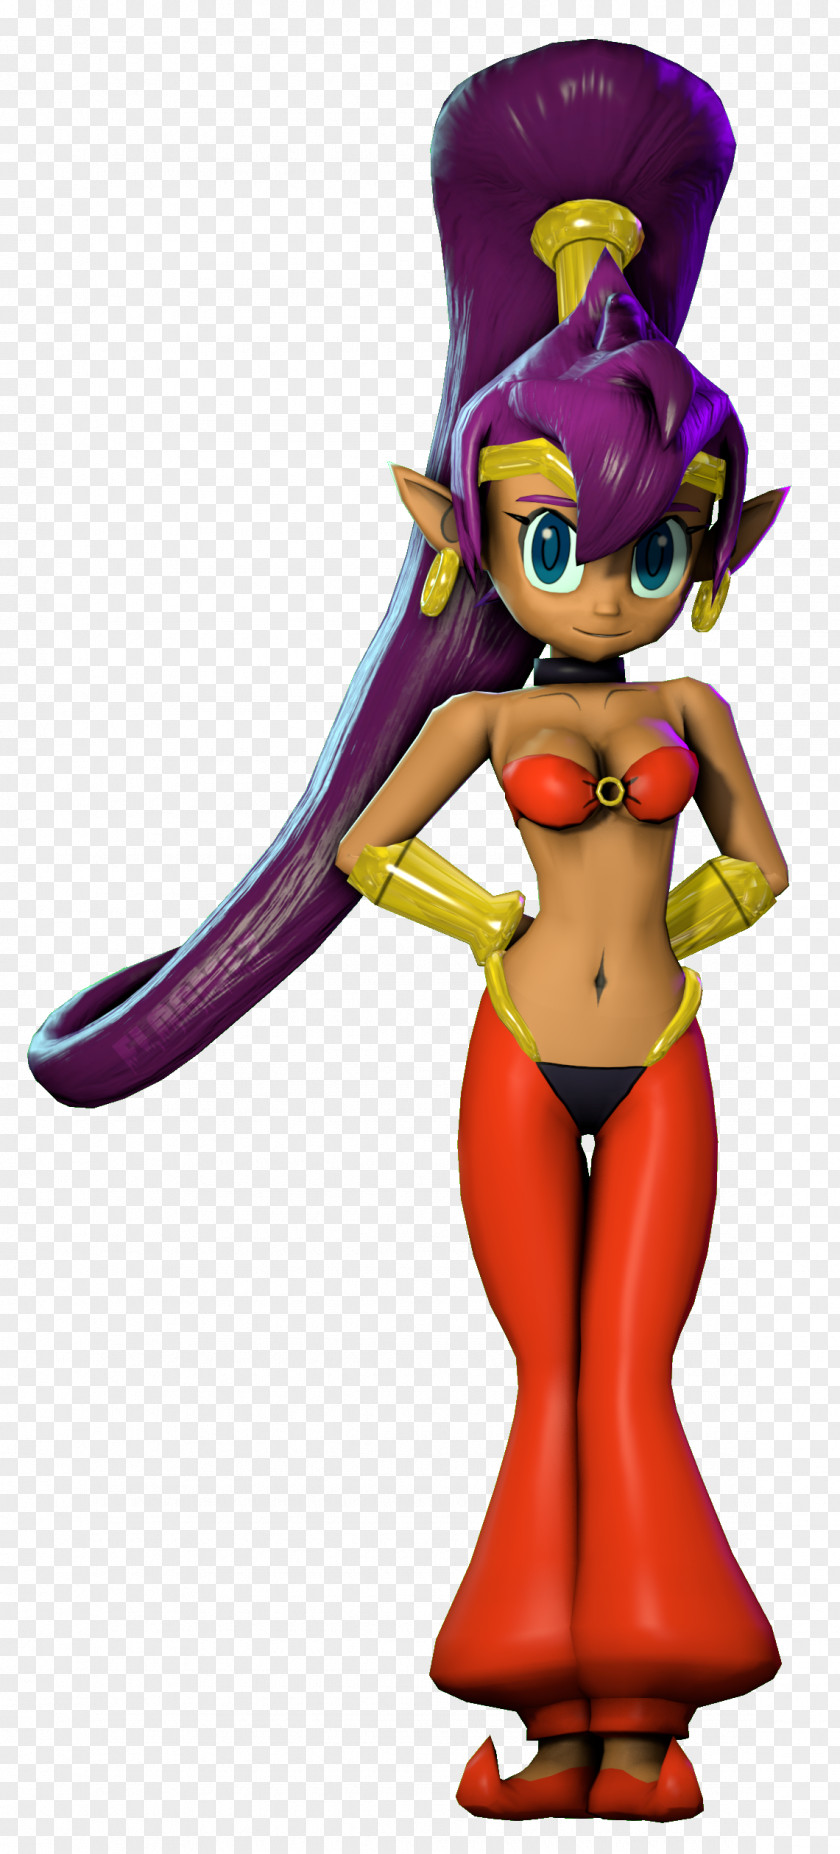 Wayforward Technologies Shantae And The Pirate's Curse Shantae: Risky's Revenge 3D Computer Graphics DeviantArt PNG